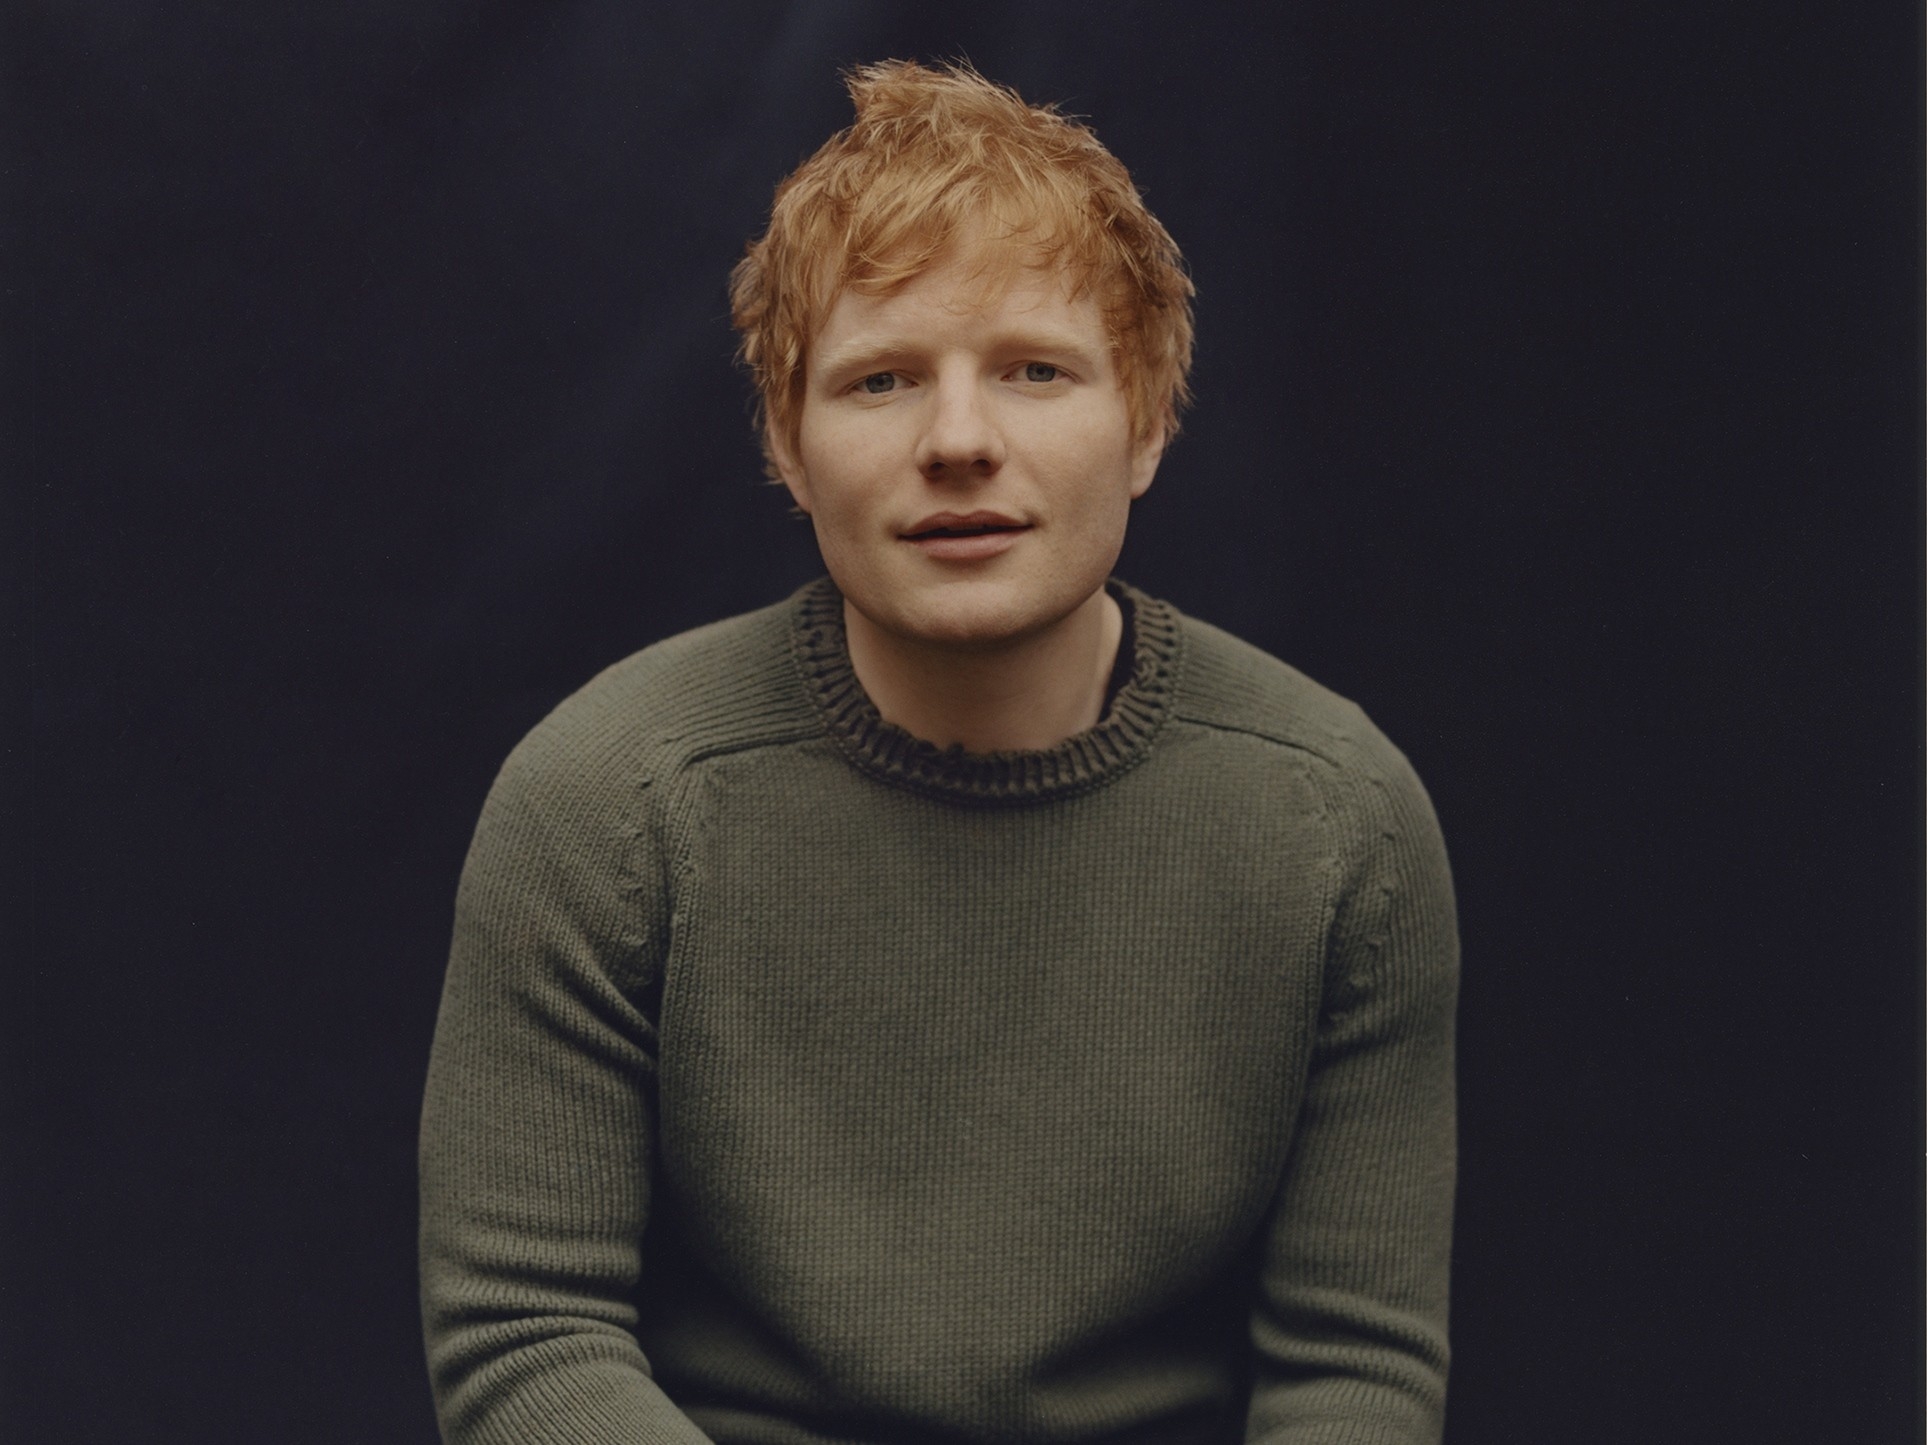 Ed Sheeran《Bad Habits》挑戰中毒性 EDM 創作強勢回歸！回顧經典神曲 TOP 5 發現我們愛他的理由！